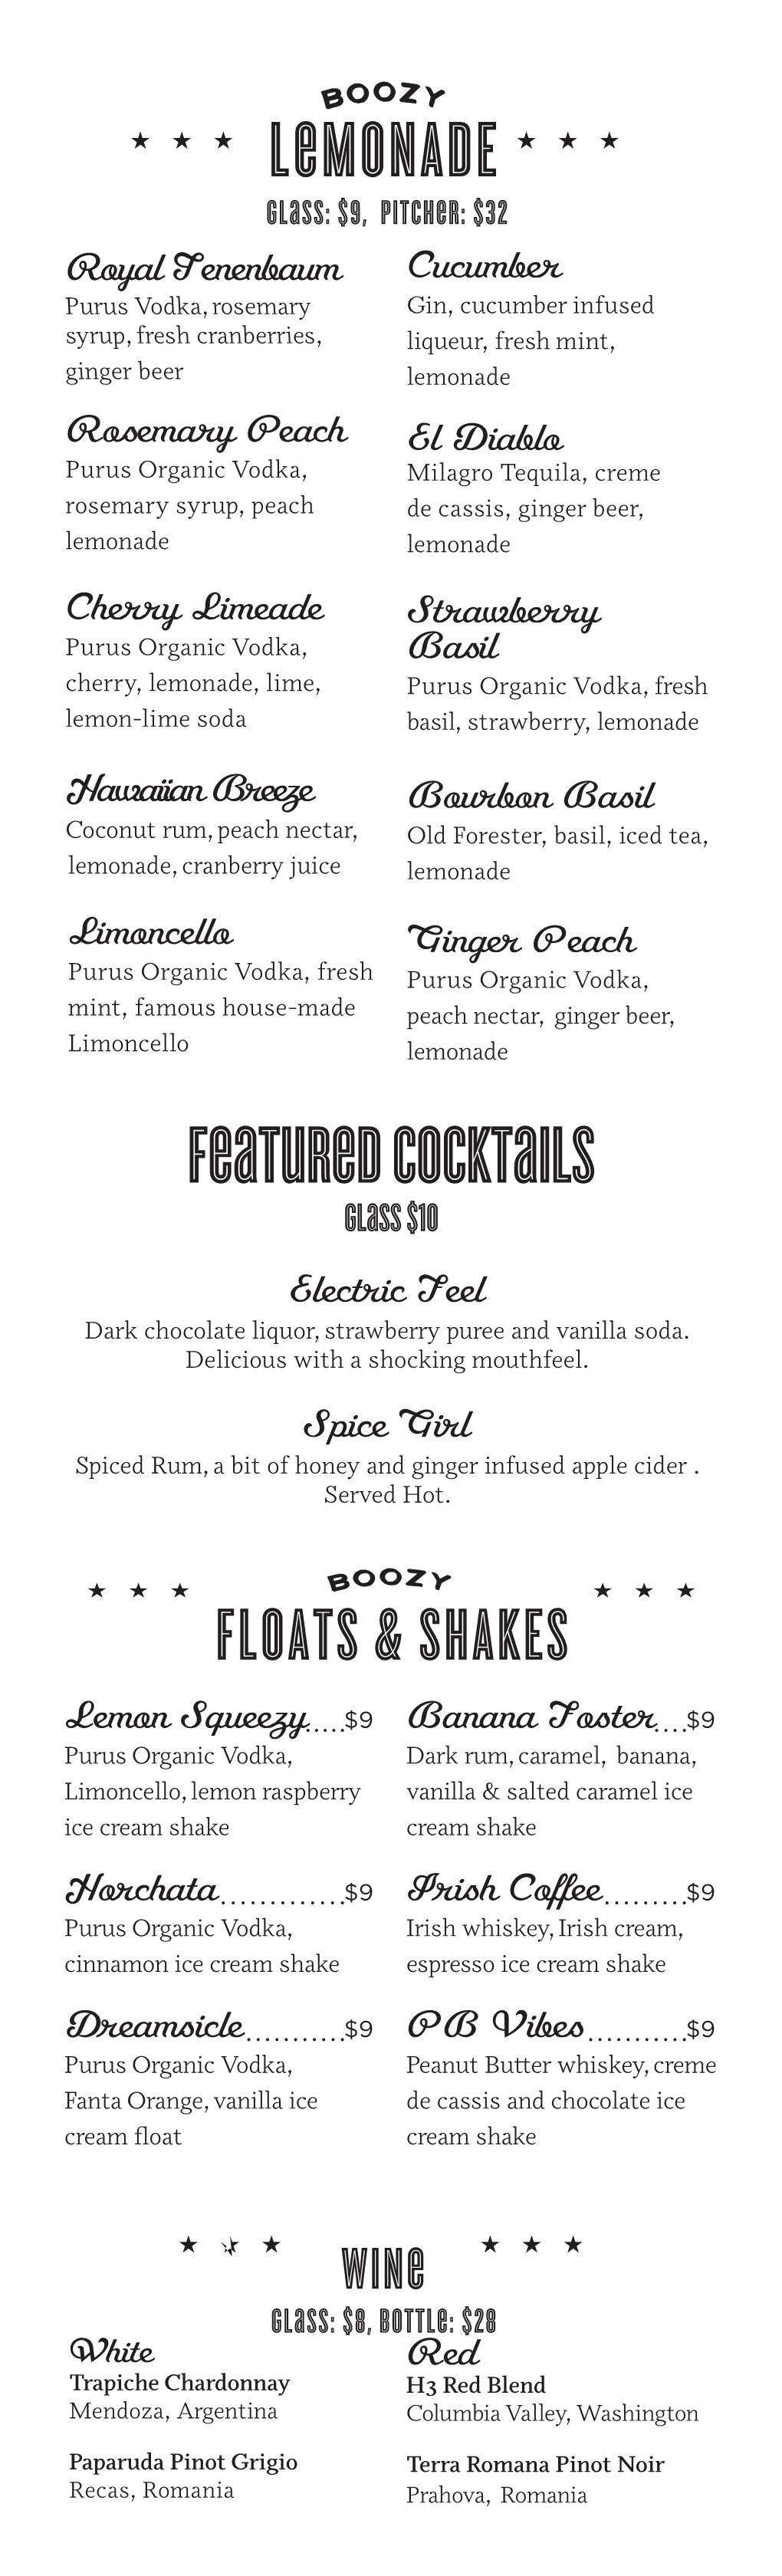 Featured Cocktails Glass $10 Electric Feel Dark Chocolate Liquor, Strawberry Puree and Vanilla Soda